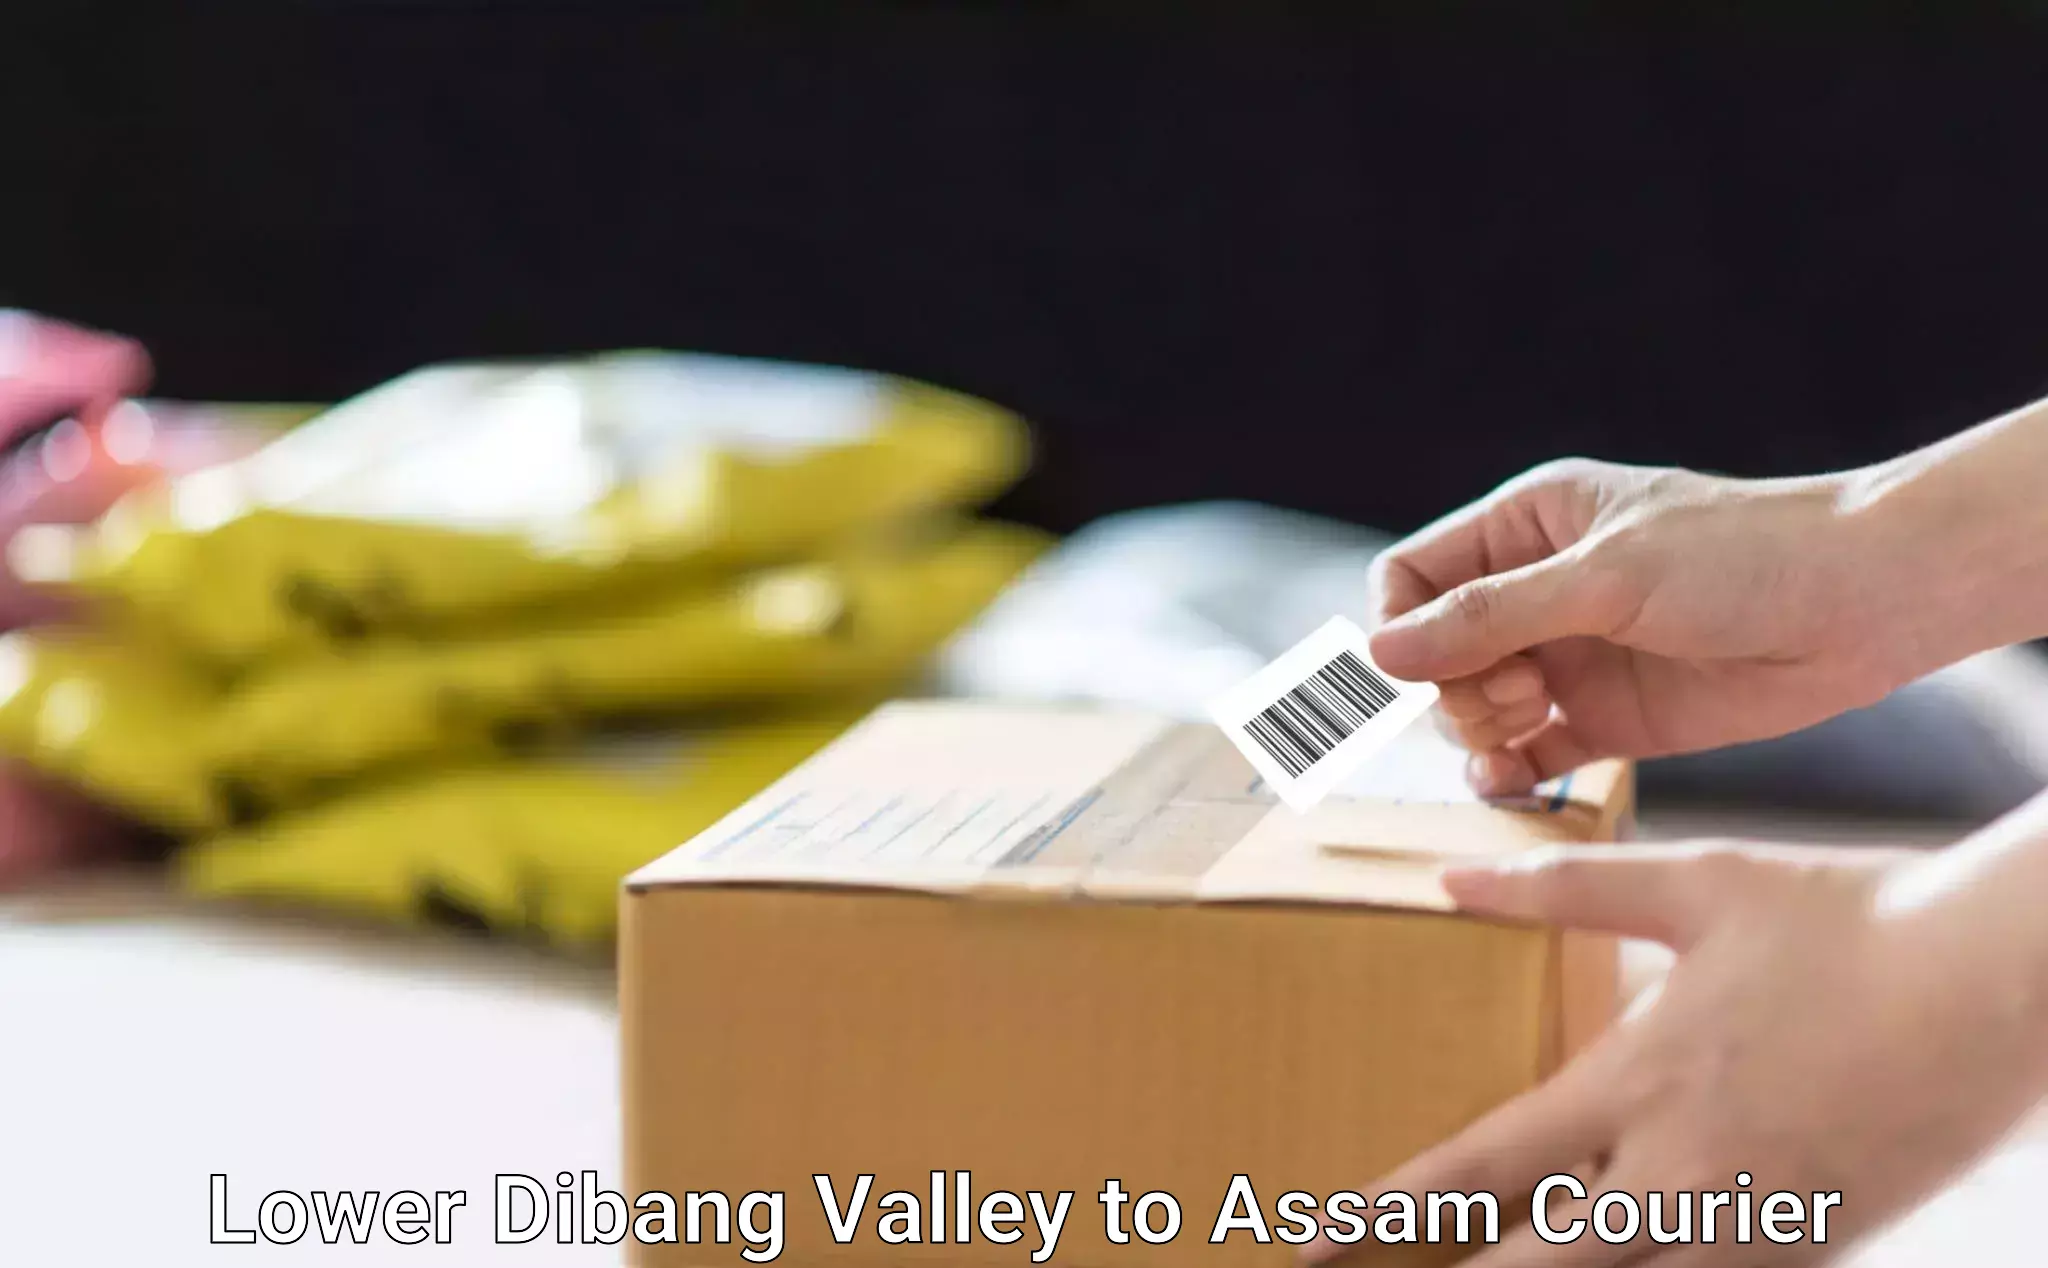 Express postal services Lower Dibang Valley to Karbi Anglong